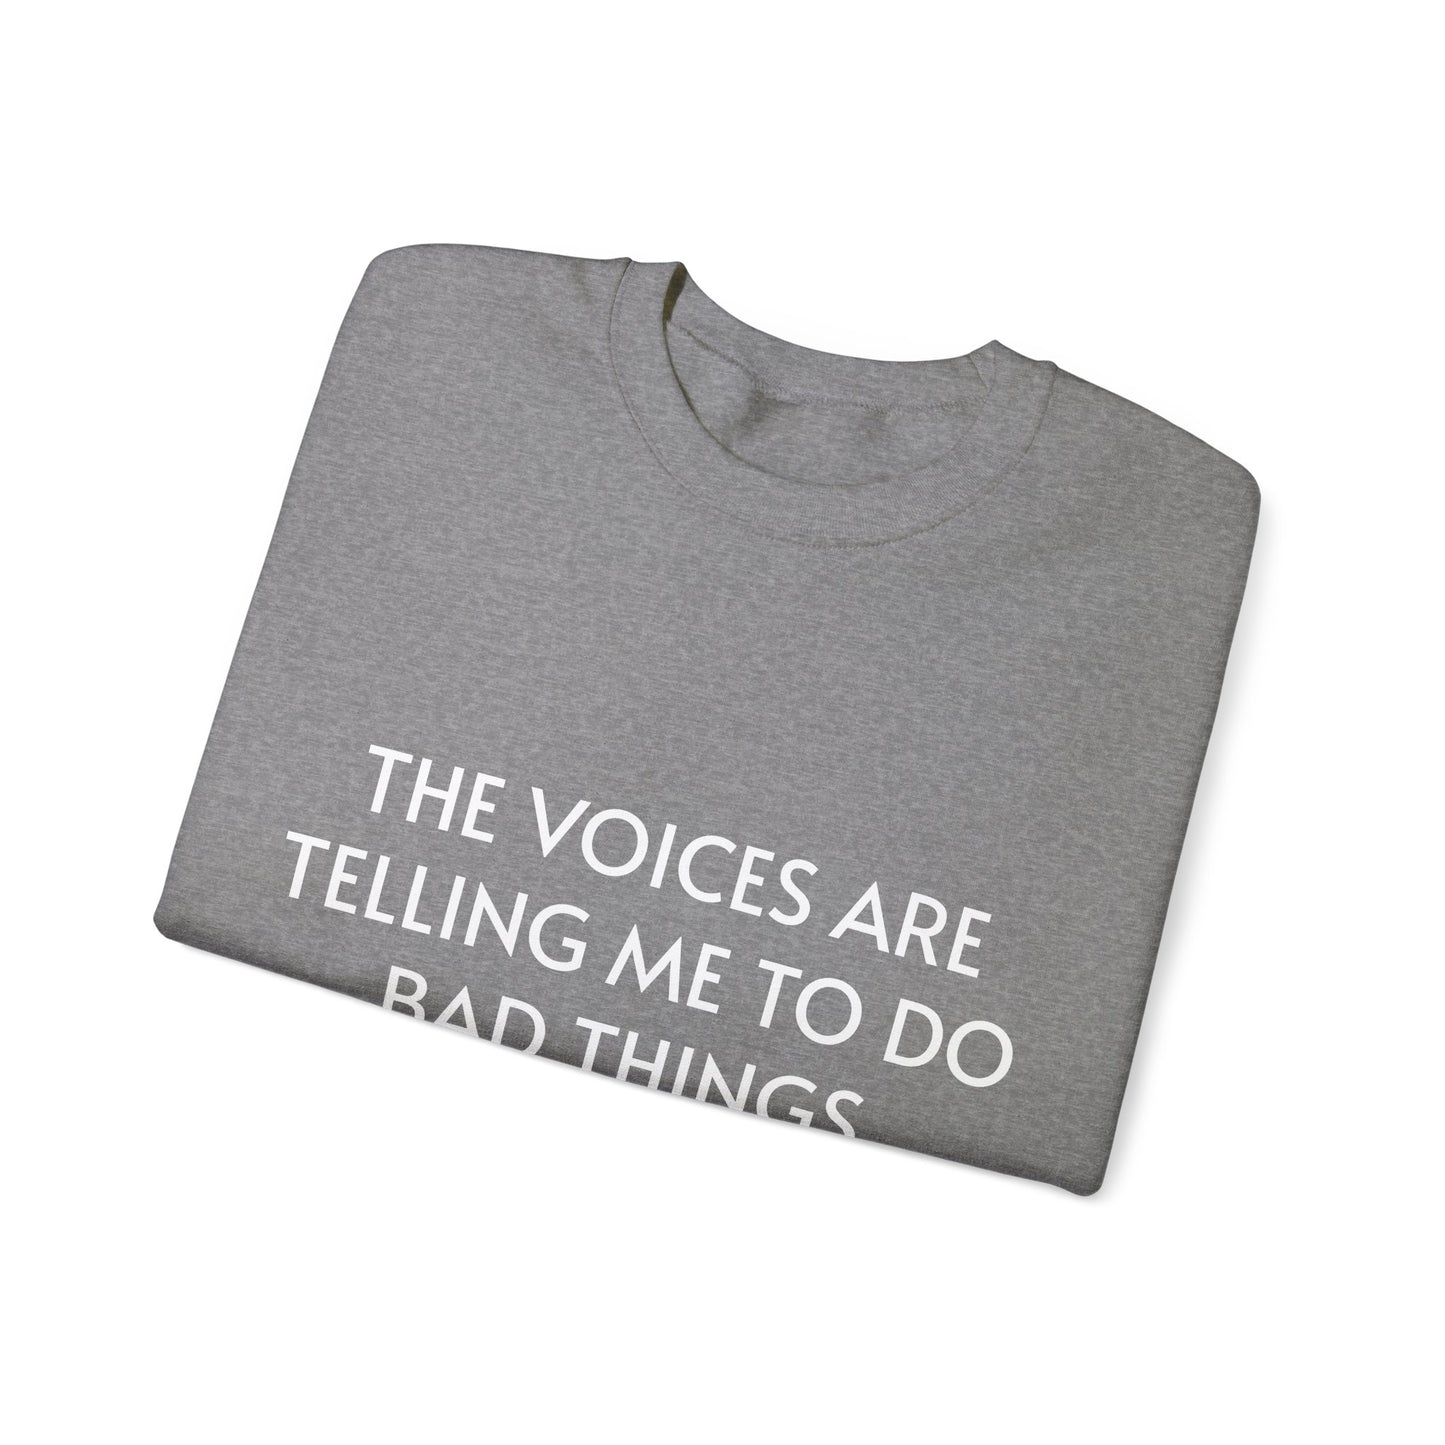 The voices sweatshirt